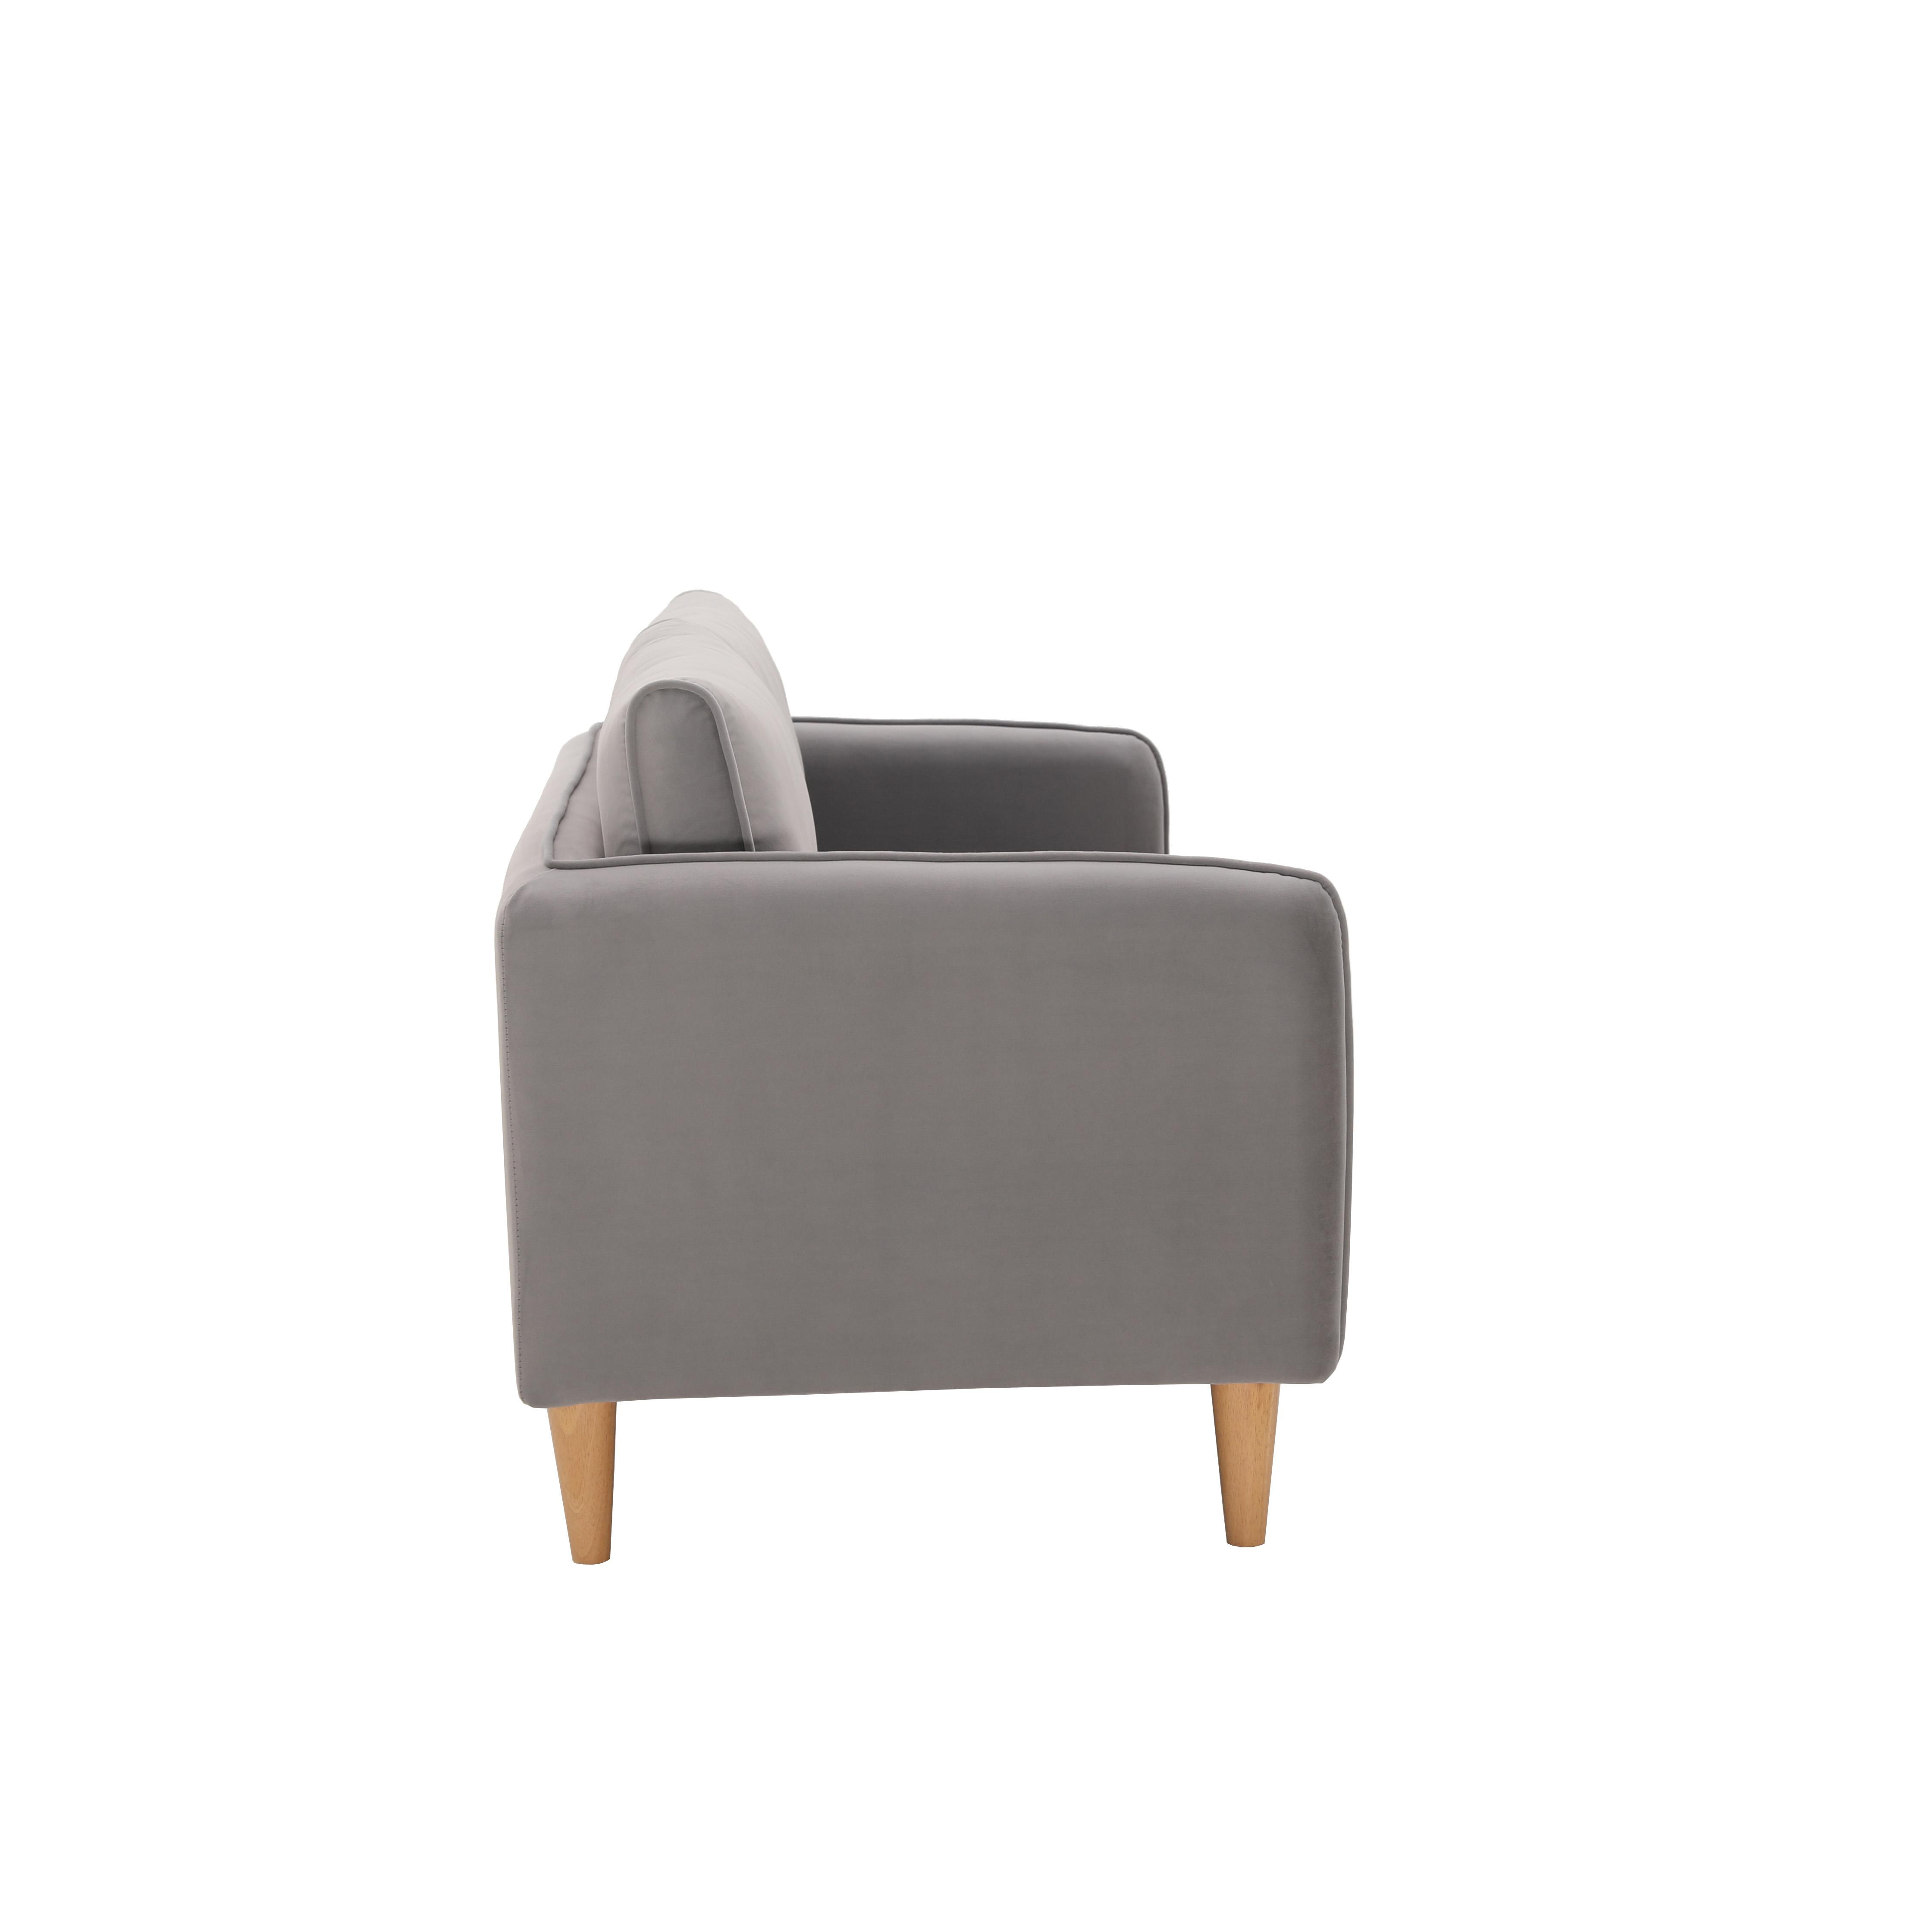 Sofa "Livia", dreisitzer, grau, Samt - Naturfarben/Grau, MODERN, Holz/Textil (176/78/76cm) - Bessagi Home